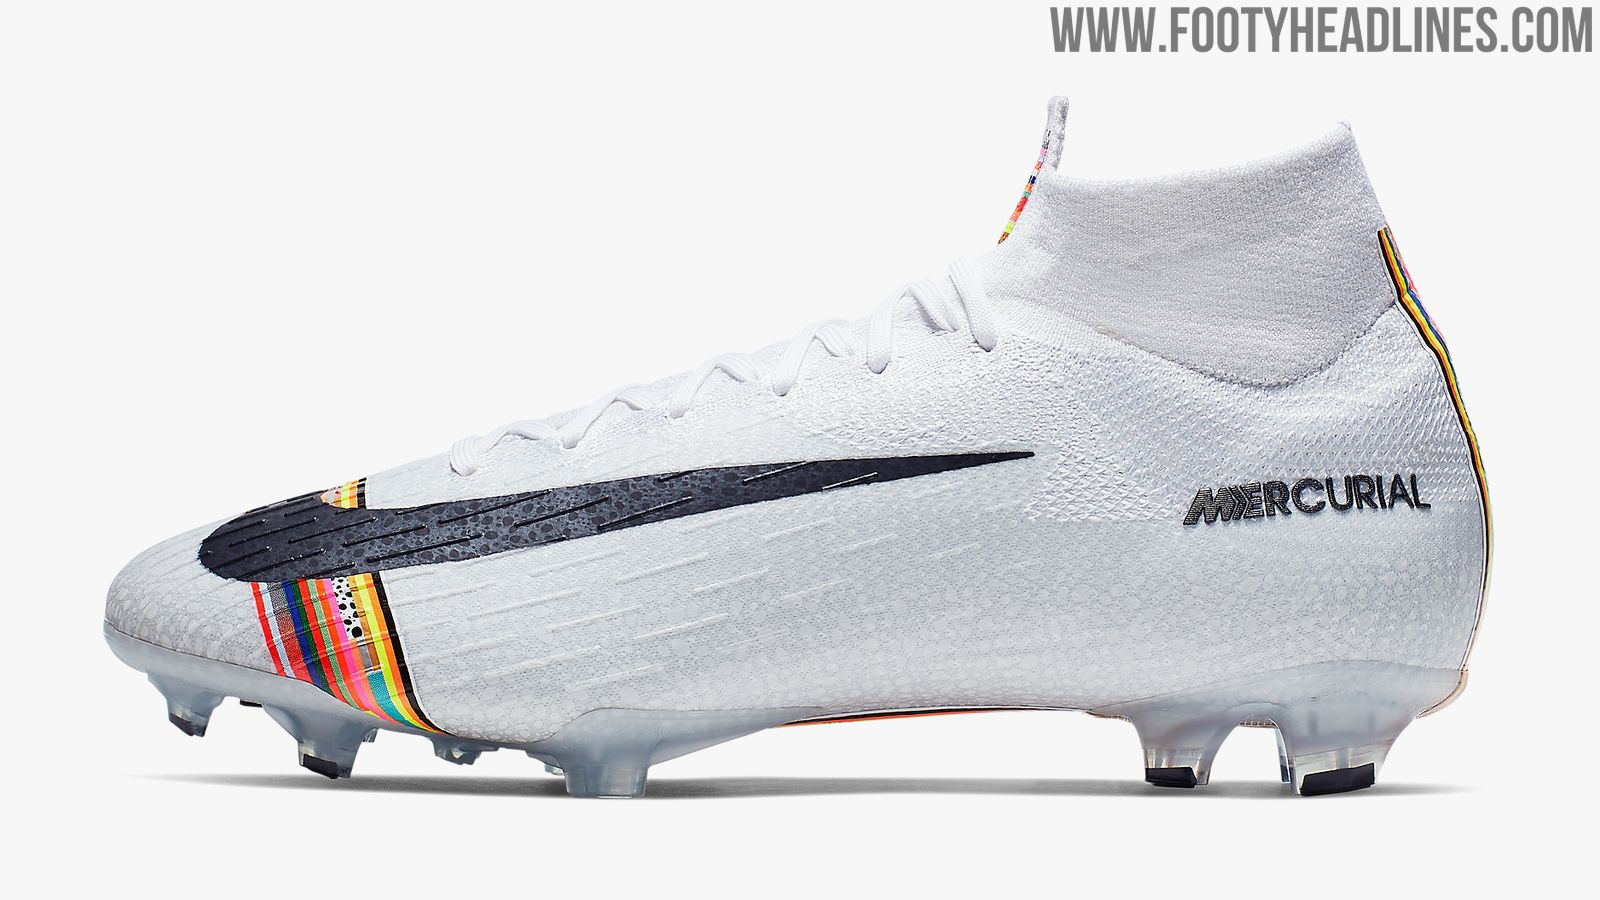 Nike Mercurial Cristiano Ronaldo 'Lvl Boots Released - Footy Headlines